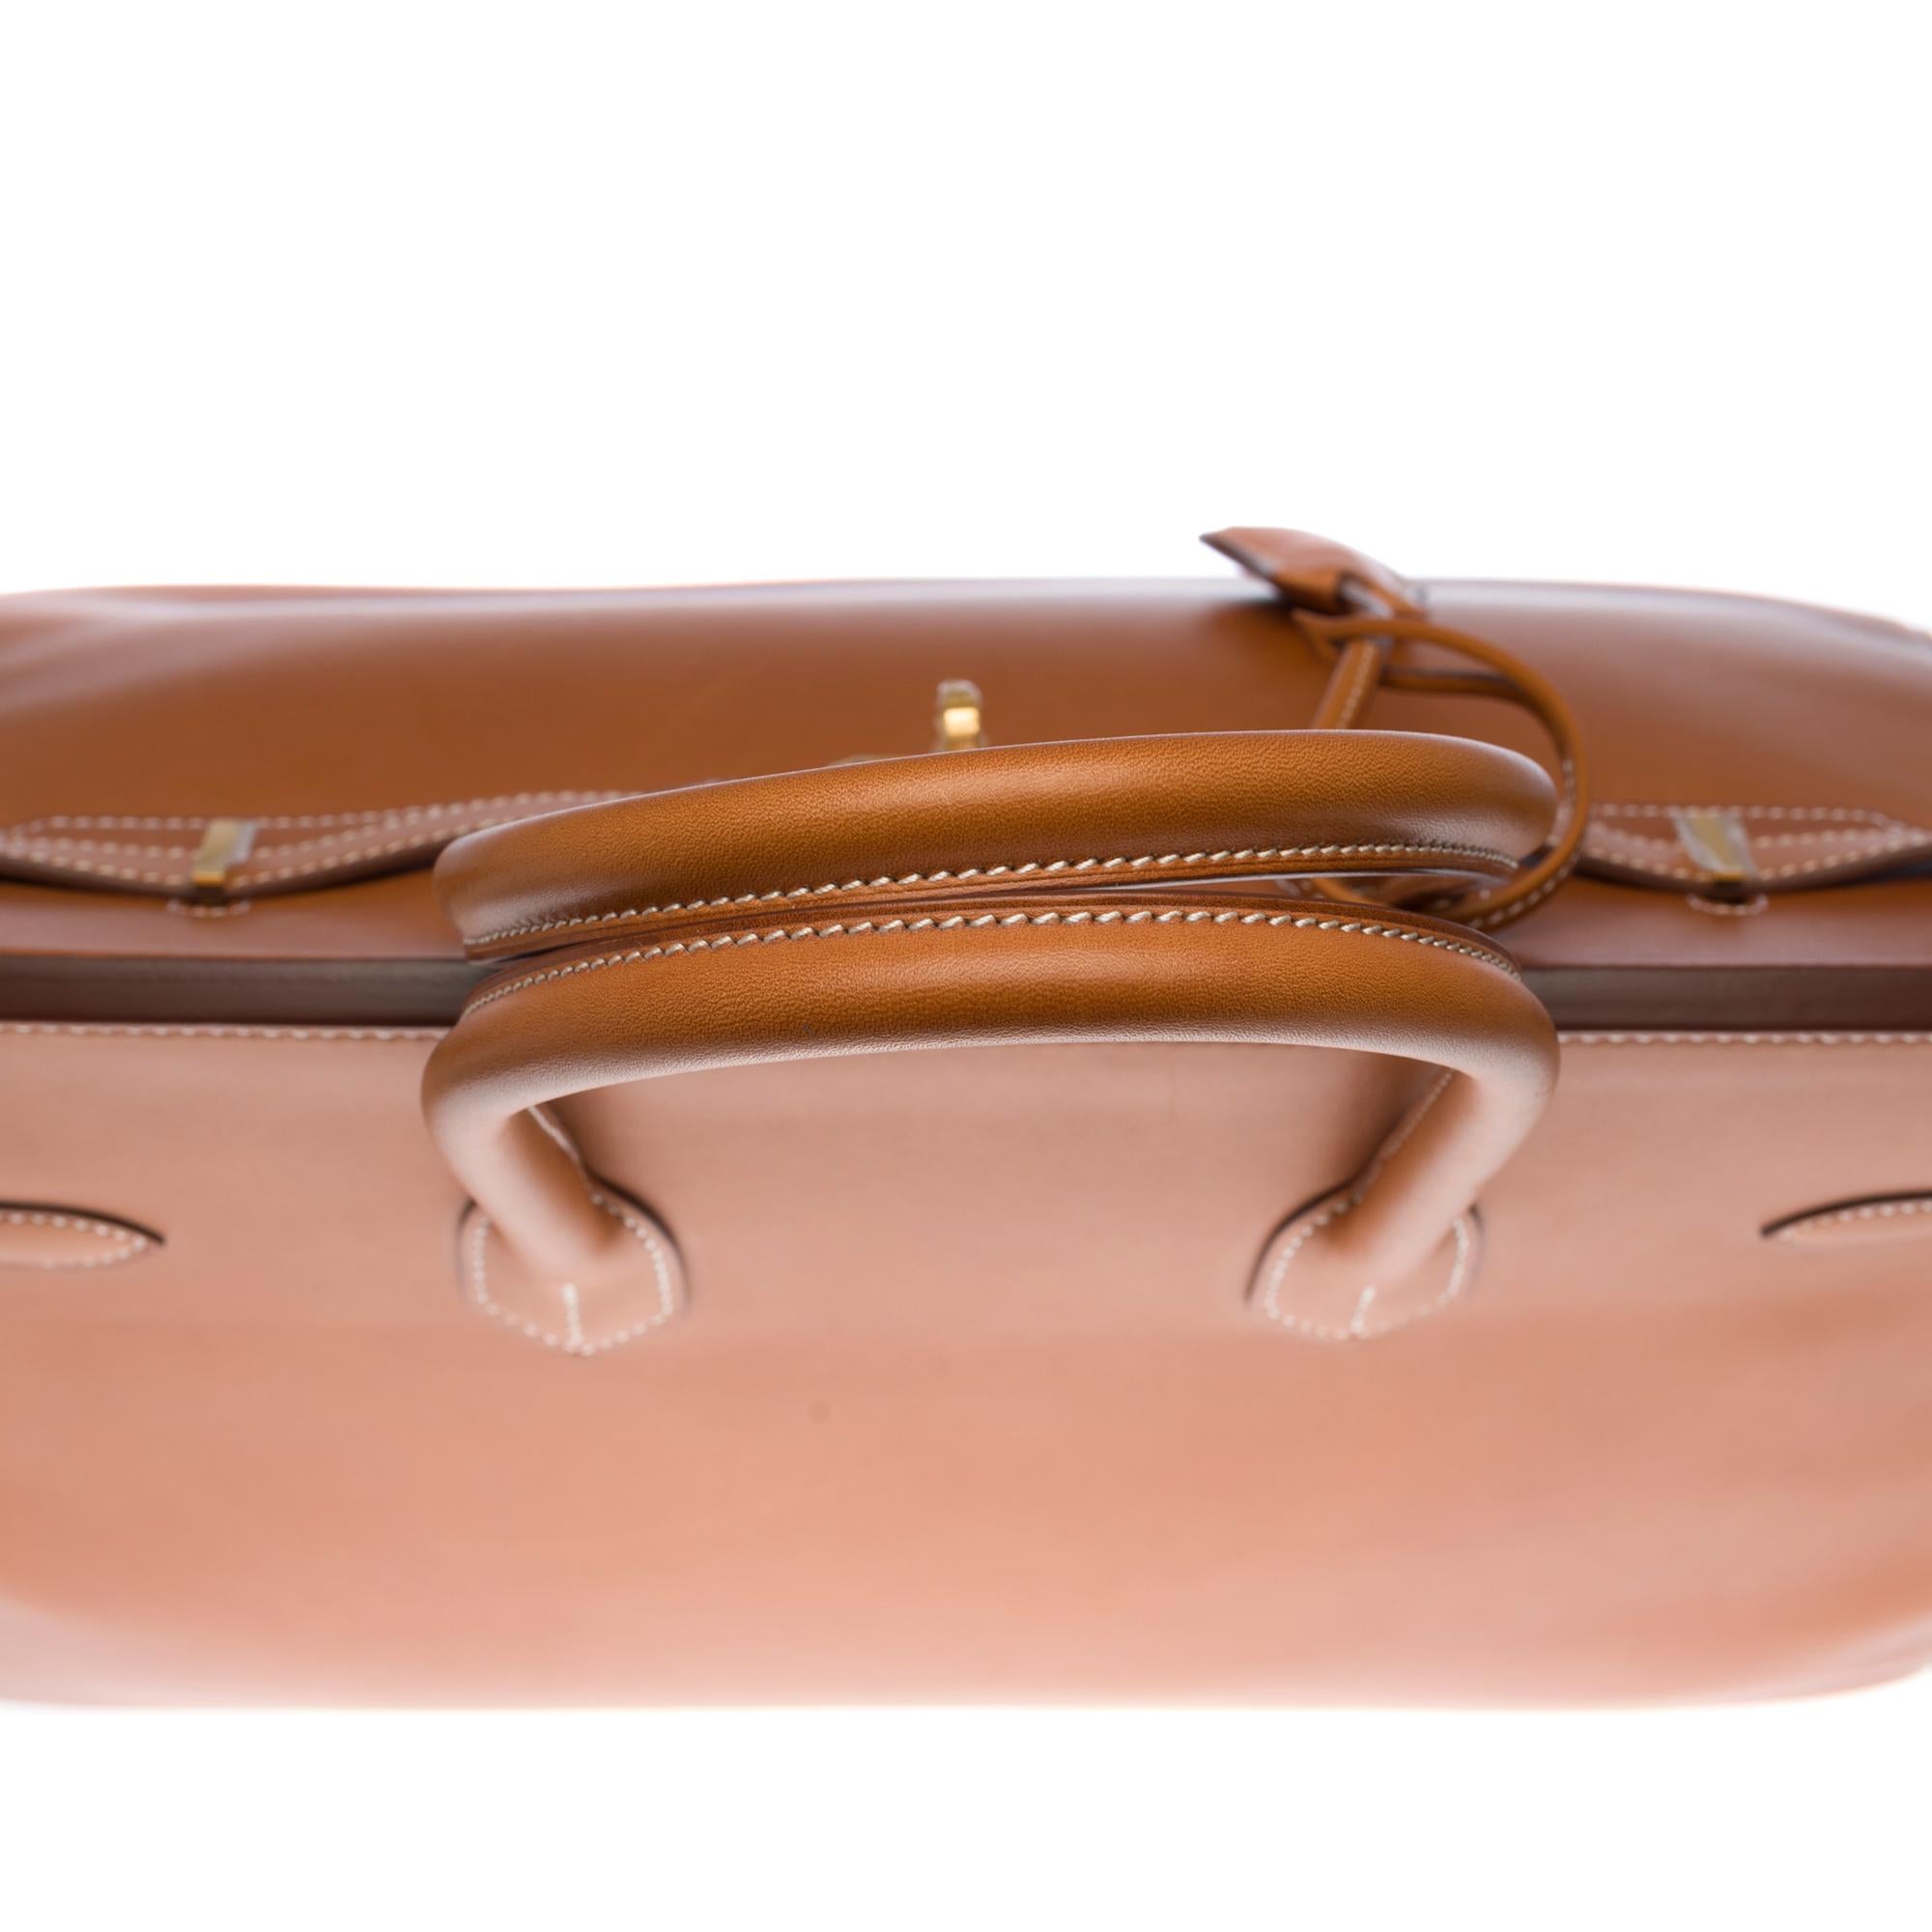 NEW - ULTRA RARE- Hermès Birkin 35 handbag in Gold Barenia leather, GHW 3